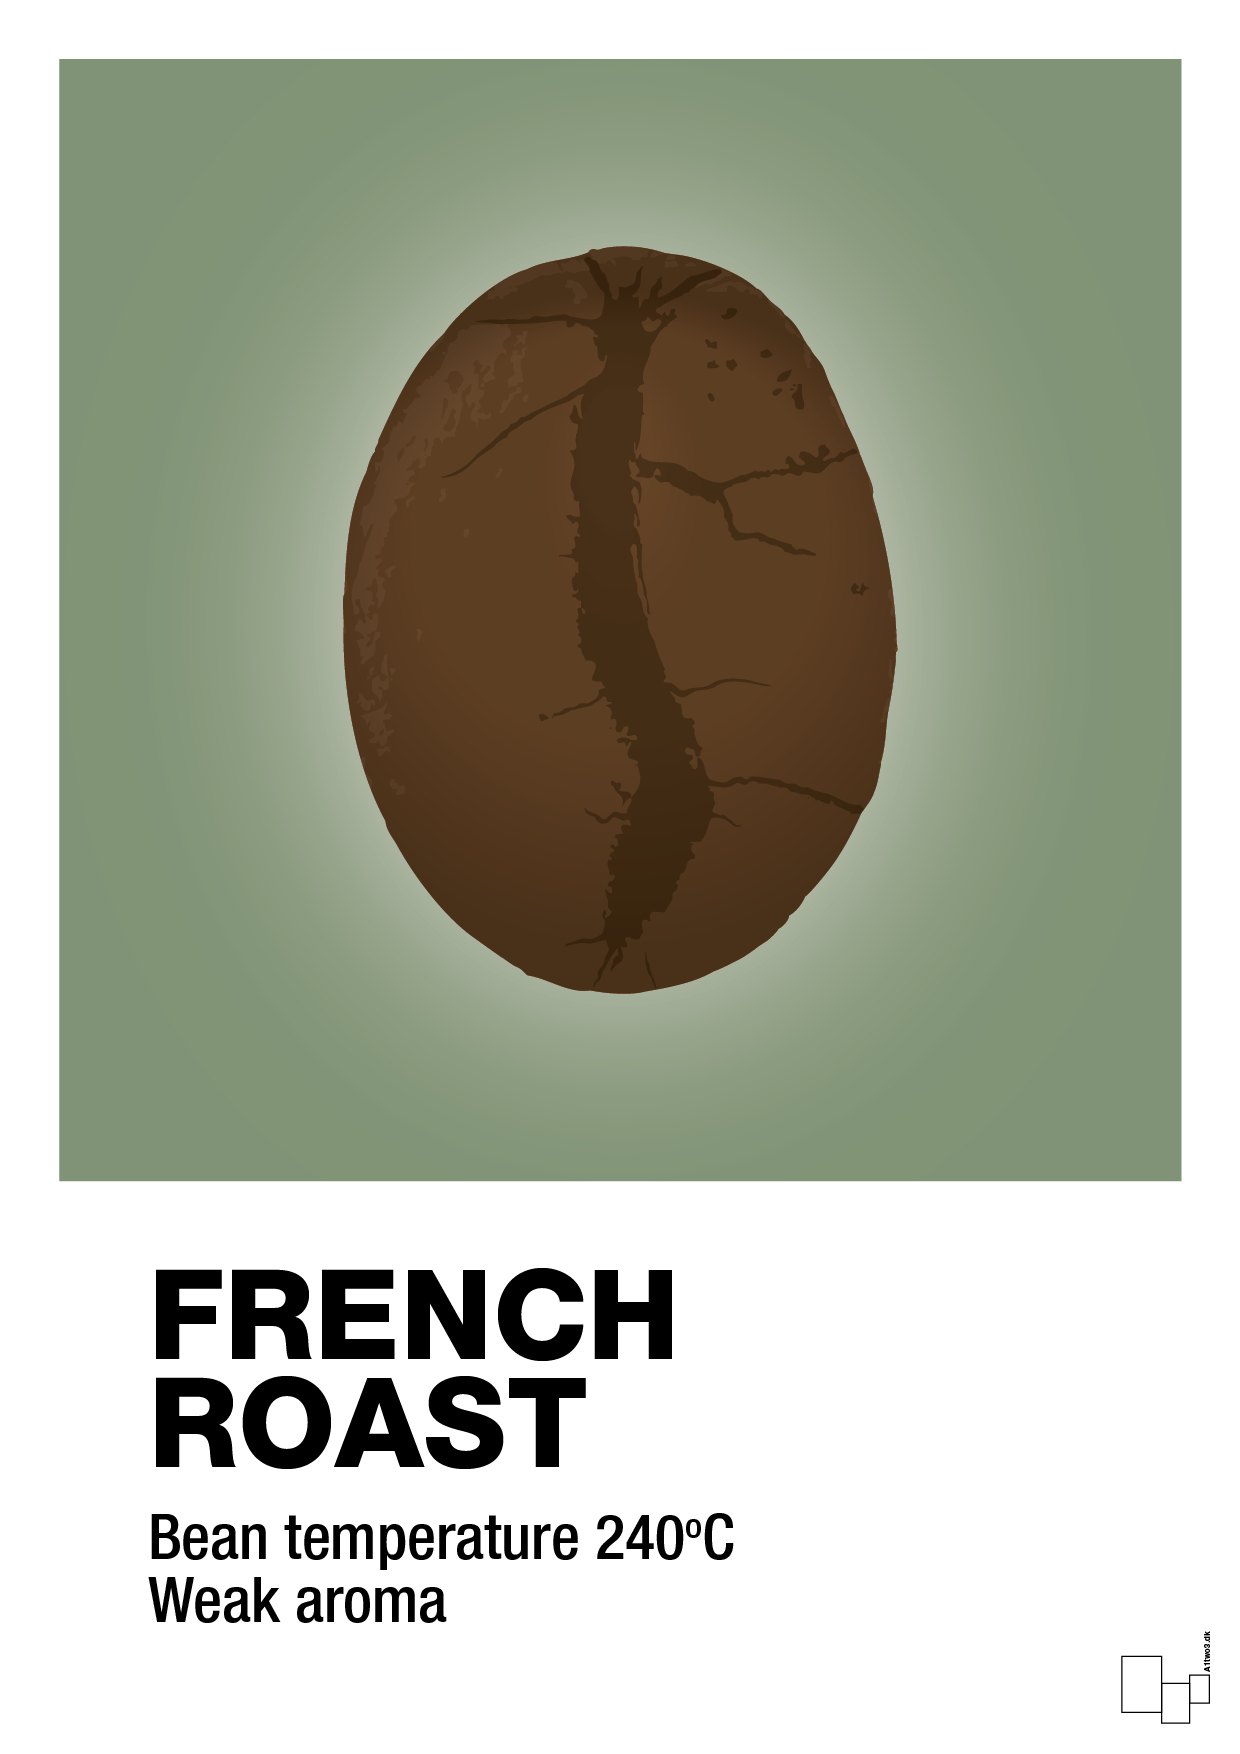 french roast - Plakat med Mad & Drikke i Jade